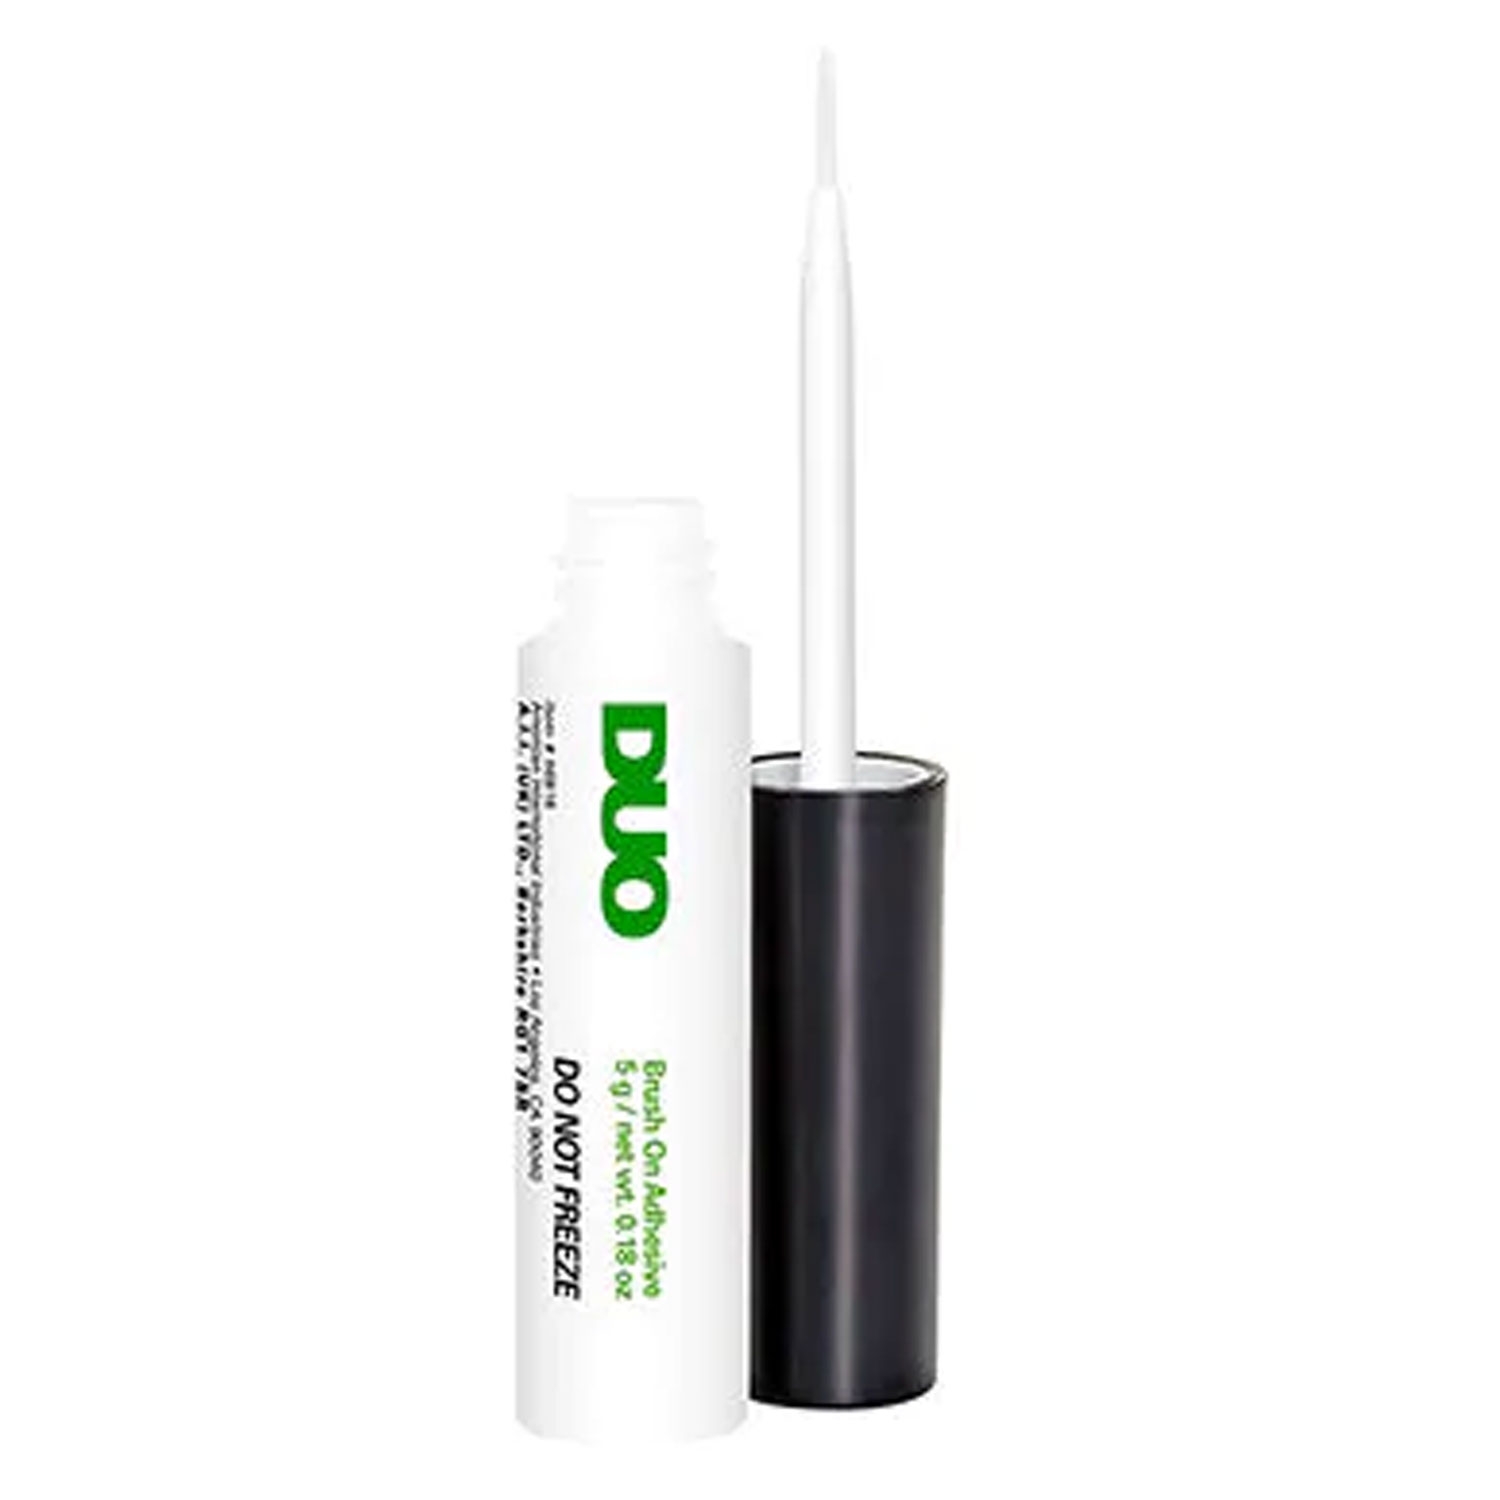 Produktbild von DUO - Brush-On Non-Latex Adhesive White/Clear